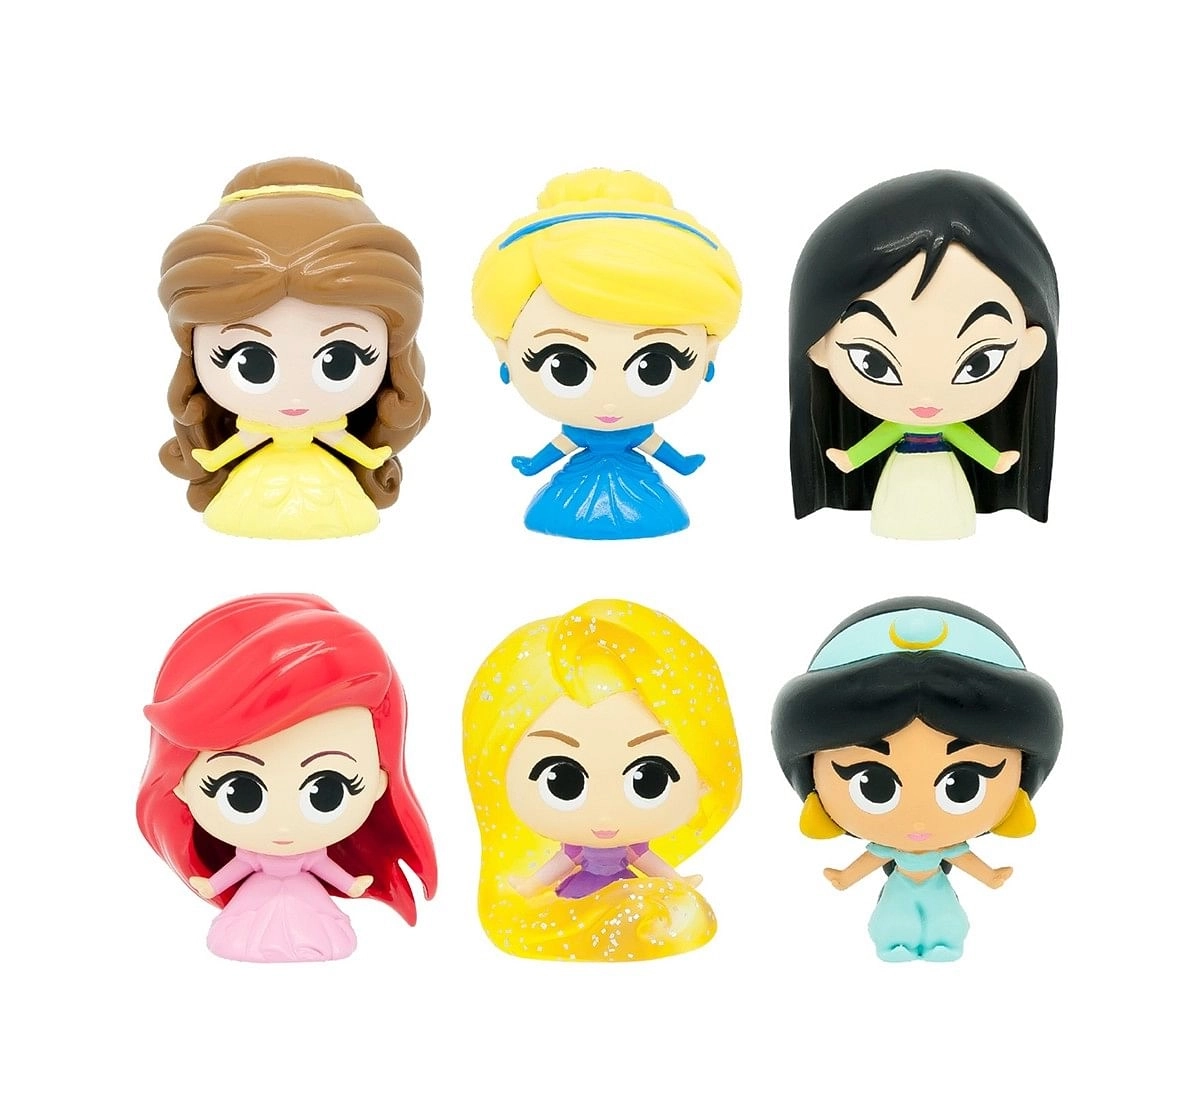 Fash'Ems Squishy Disney Princess S2 Toy Figures for Kids age 4Y+ 